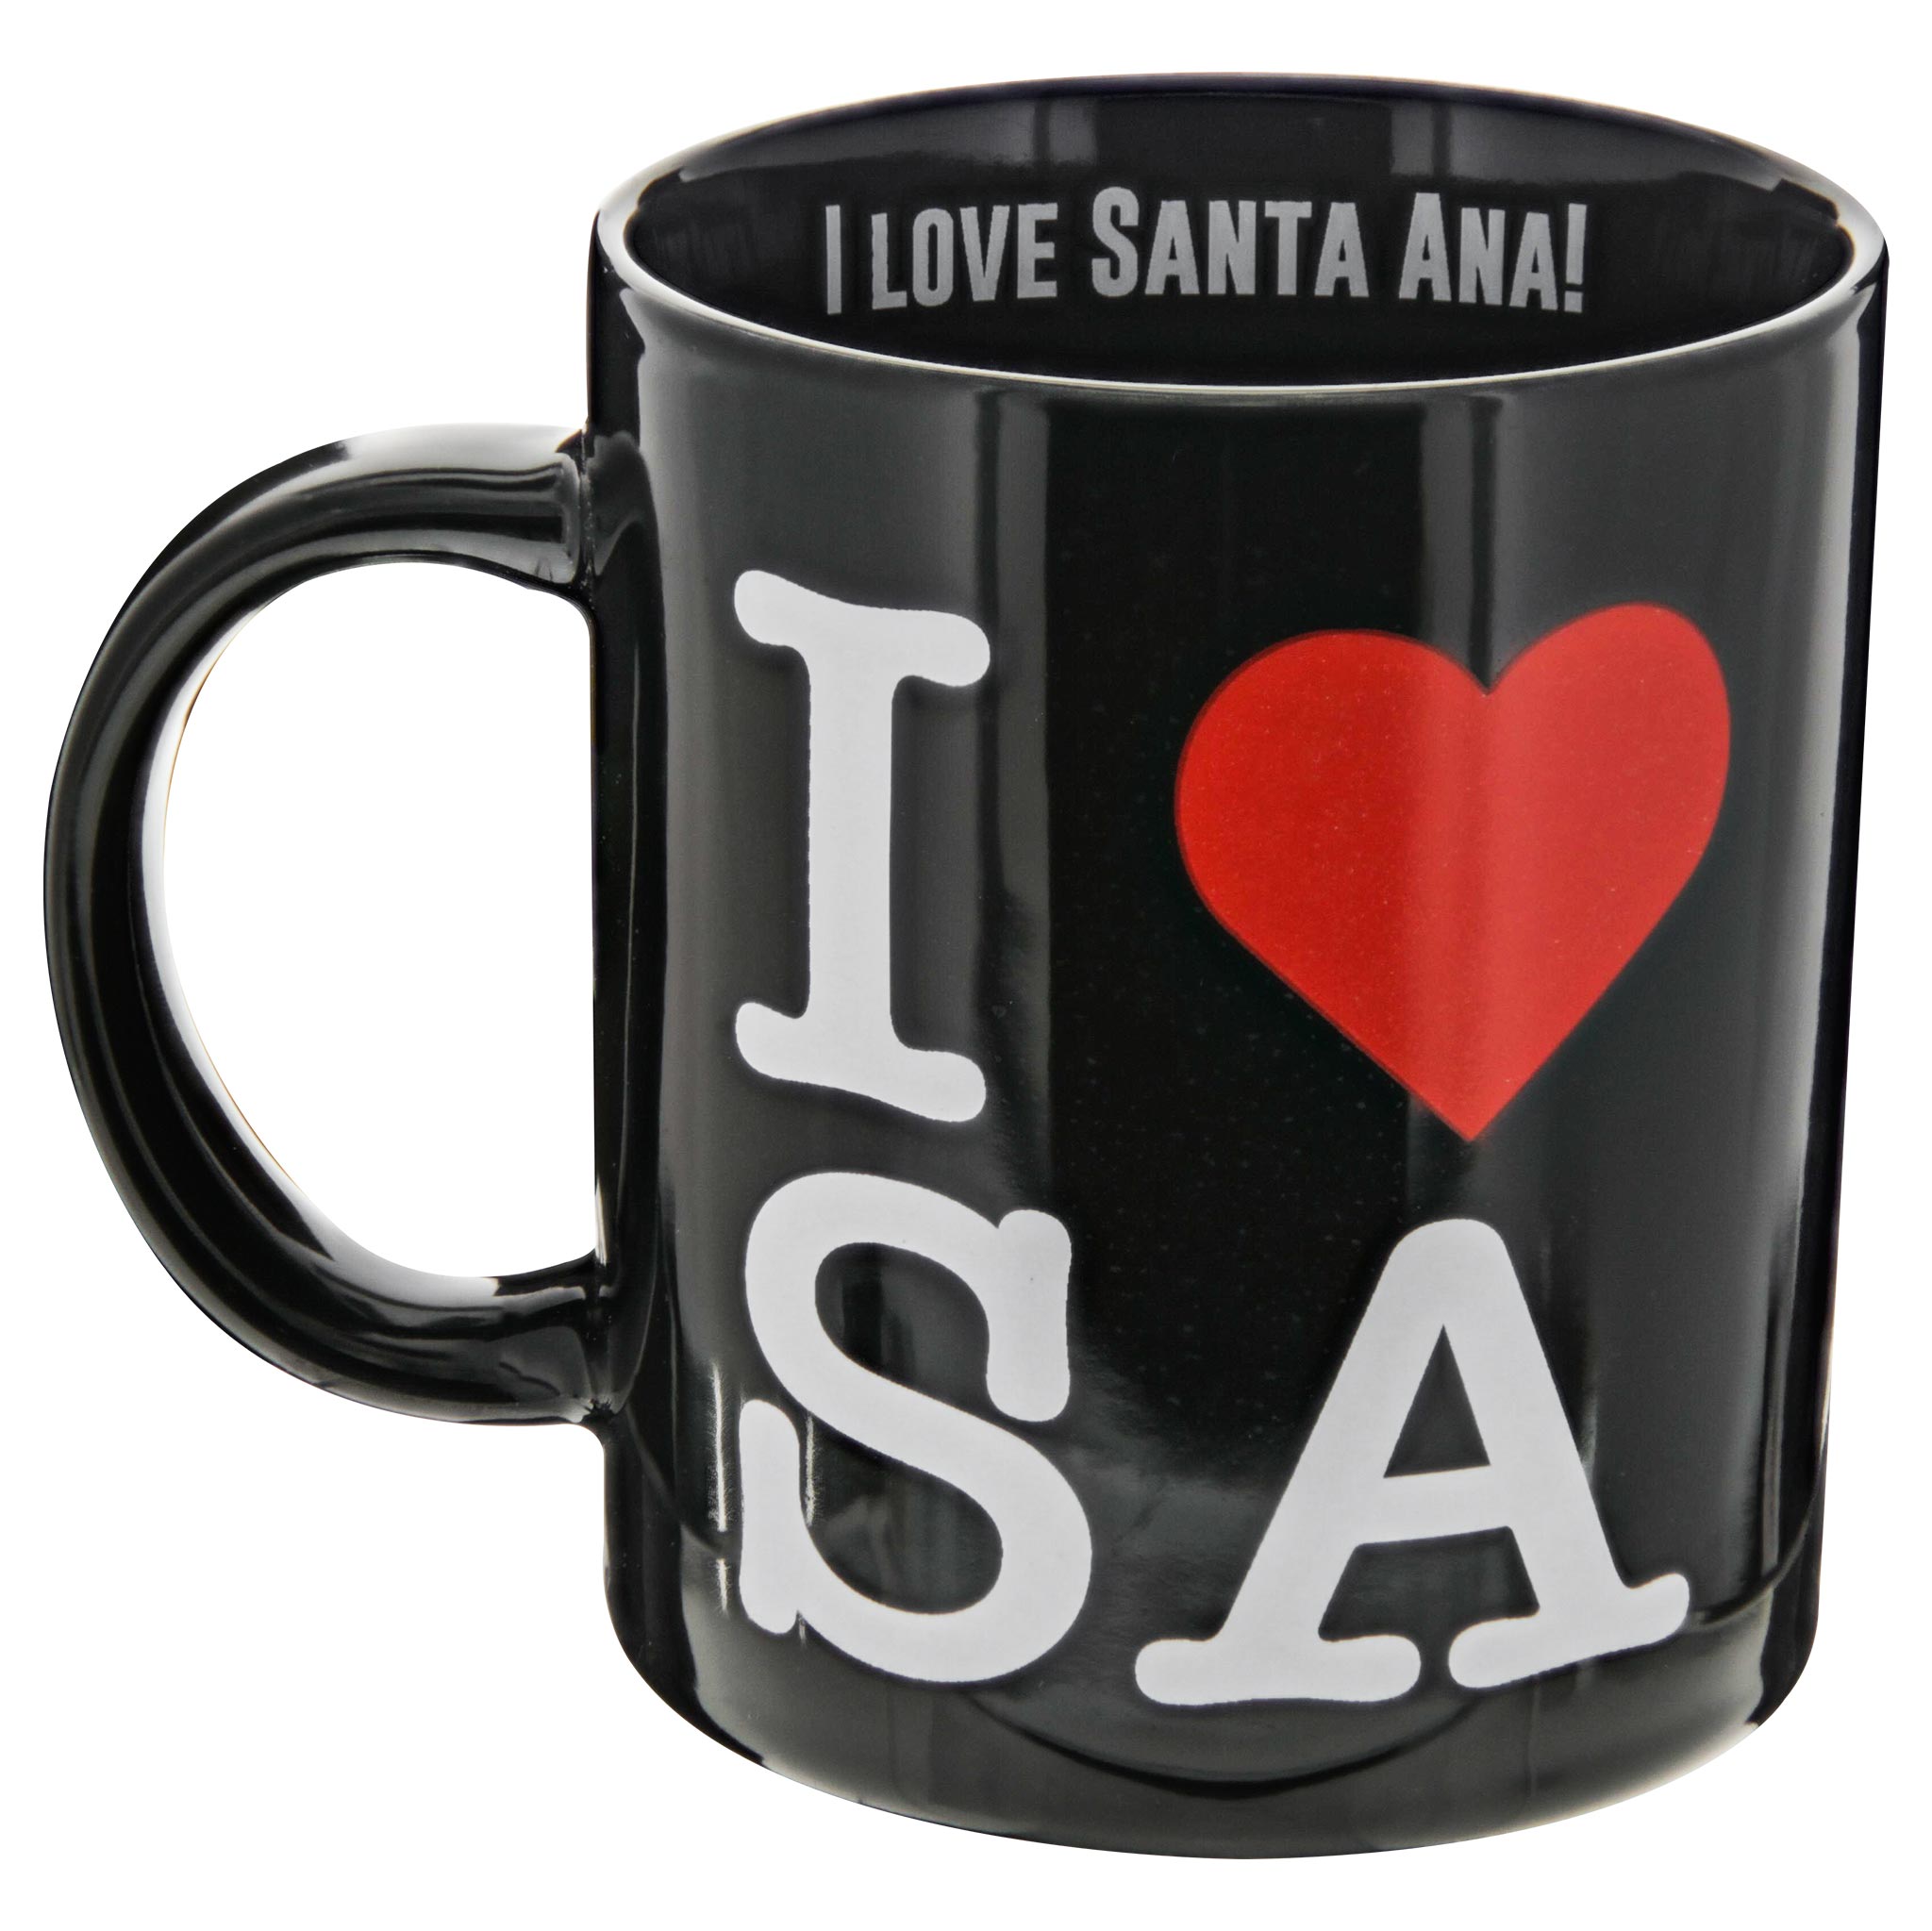 Mug I Love Saucisson